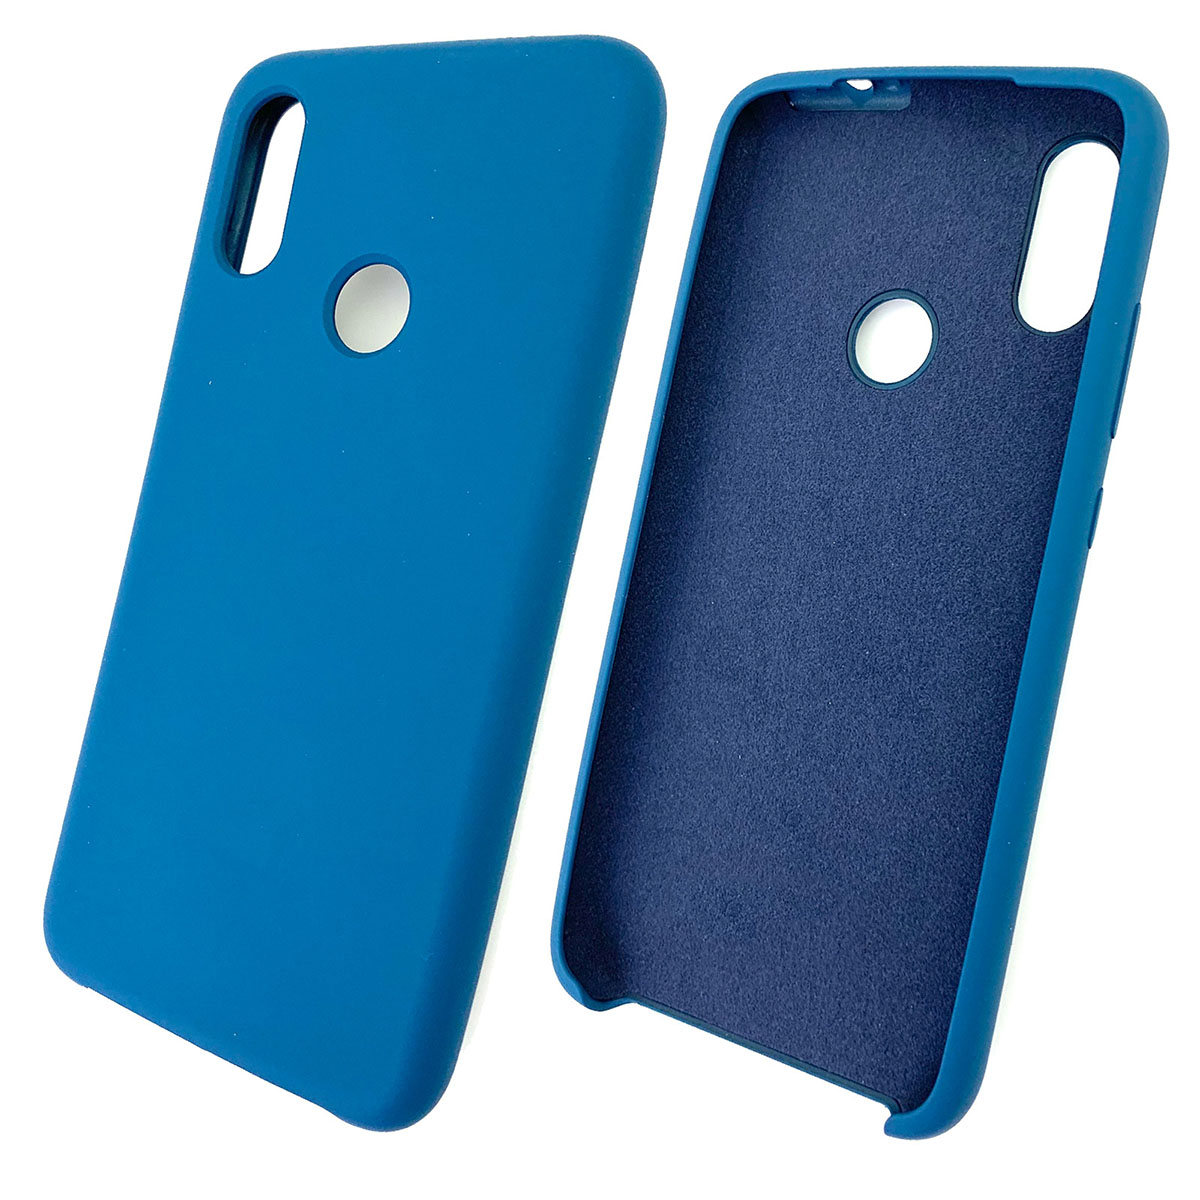 Чехол накладка Silicon Cover для XIAOMI Redmi Note 7, Note 7 Pro, силикон, бархат, цвет синий кобальт.